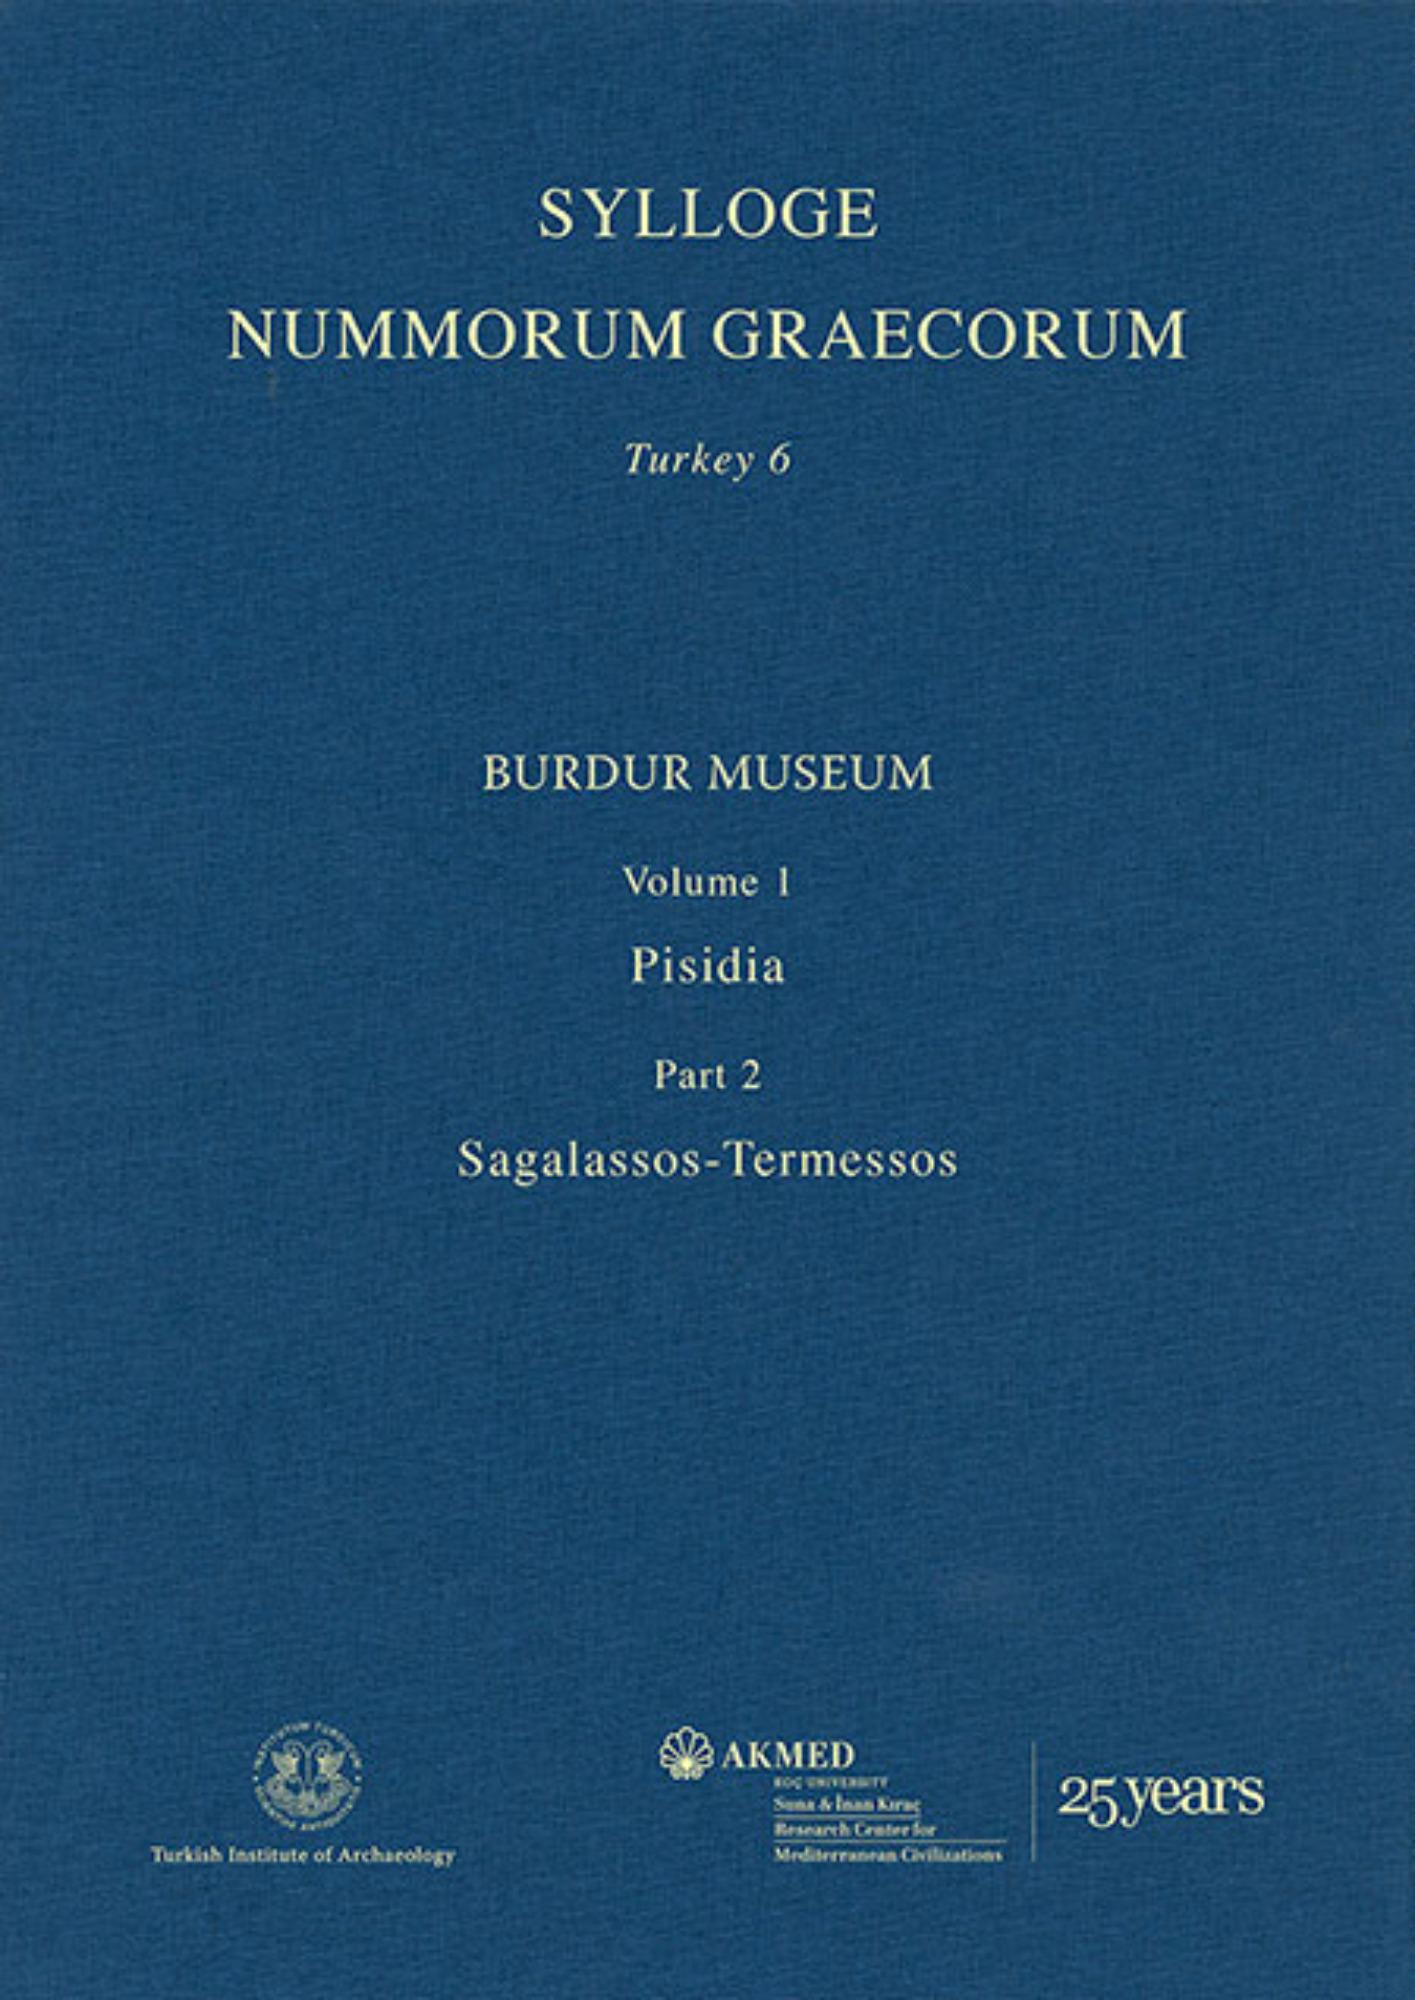 Köker, Hüseyin; Sylloge Nummorum Graecorum Turkey 6. Burdur Museum, Volume 1: Pisidia, Part 2: Sagalassos-Termessos